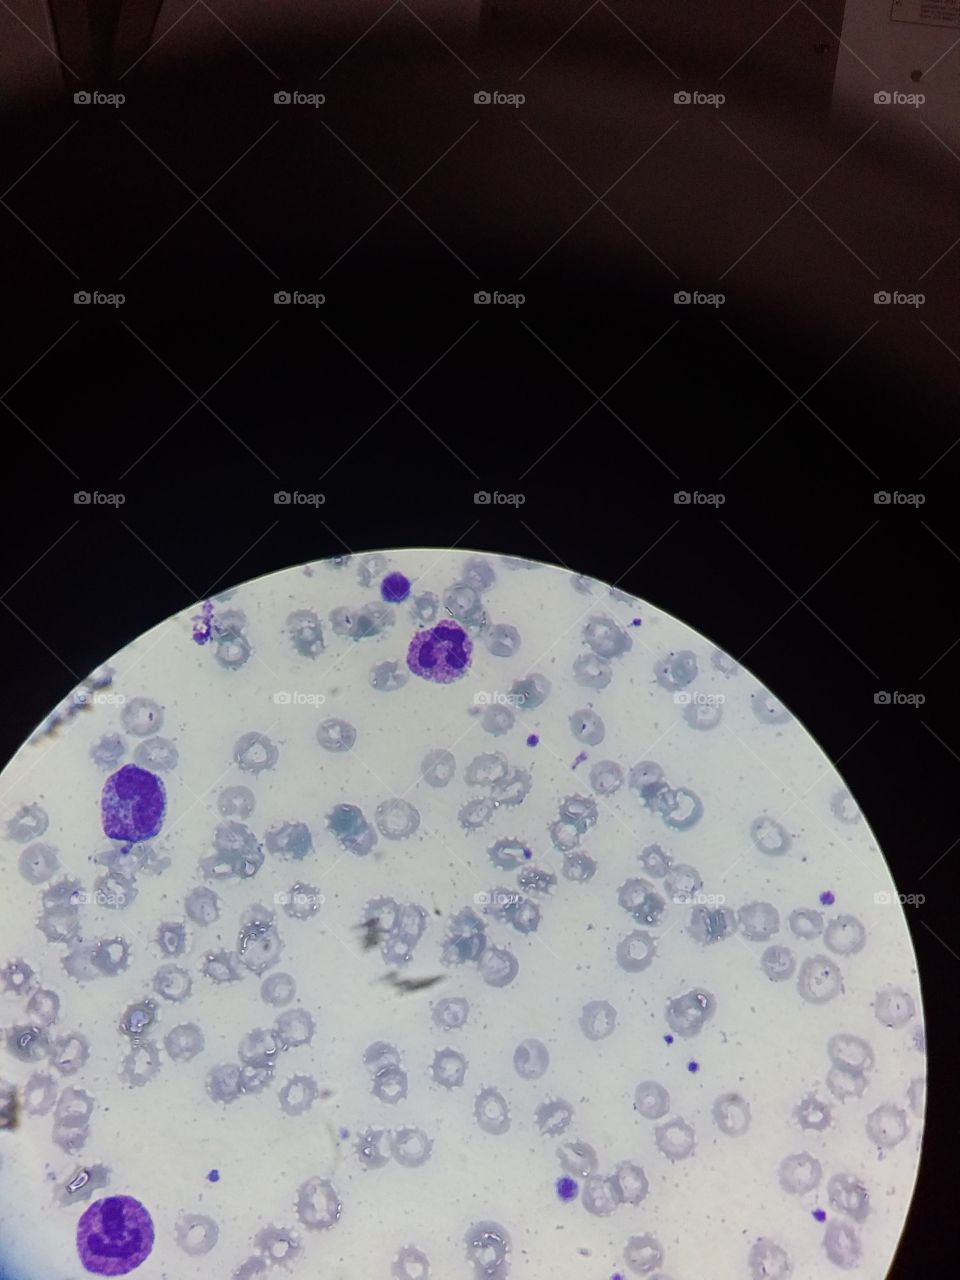 células jovens no sangue